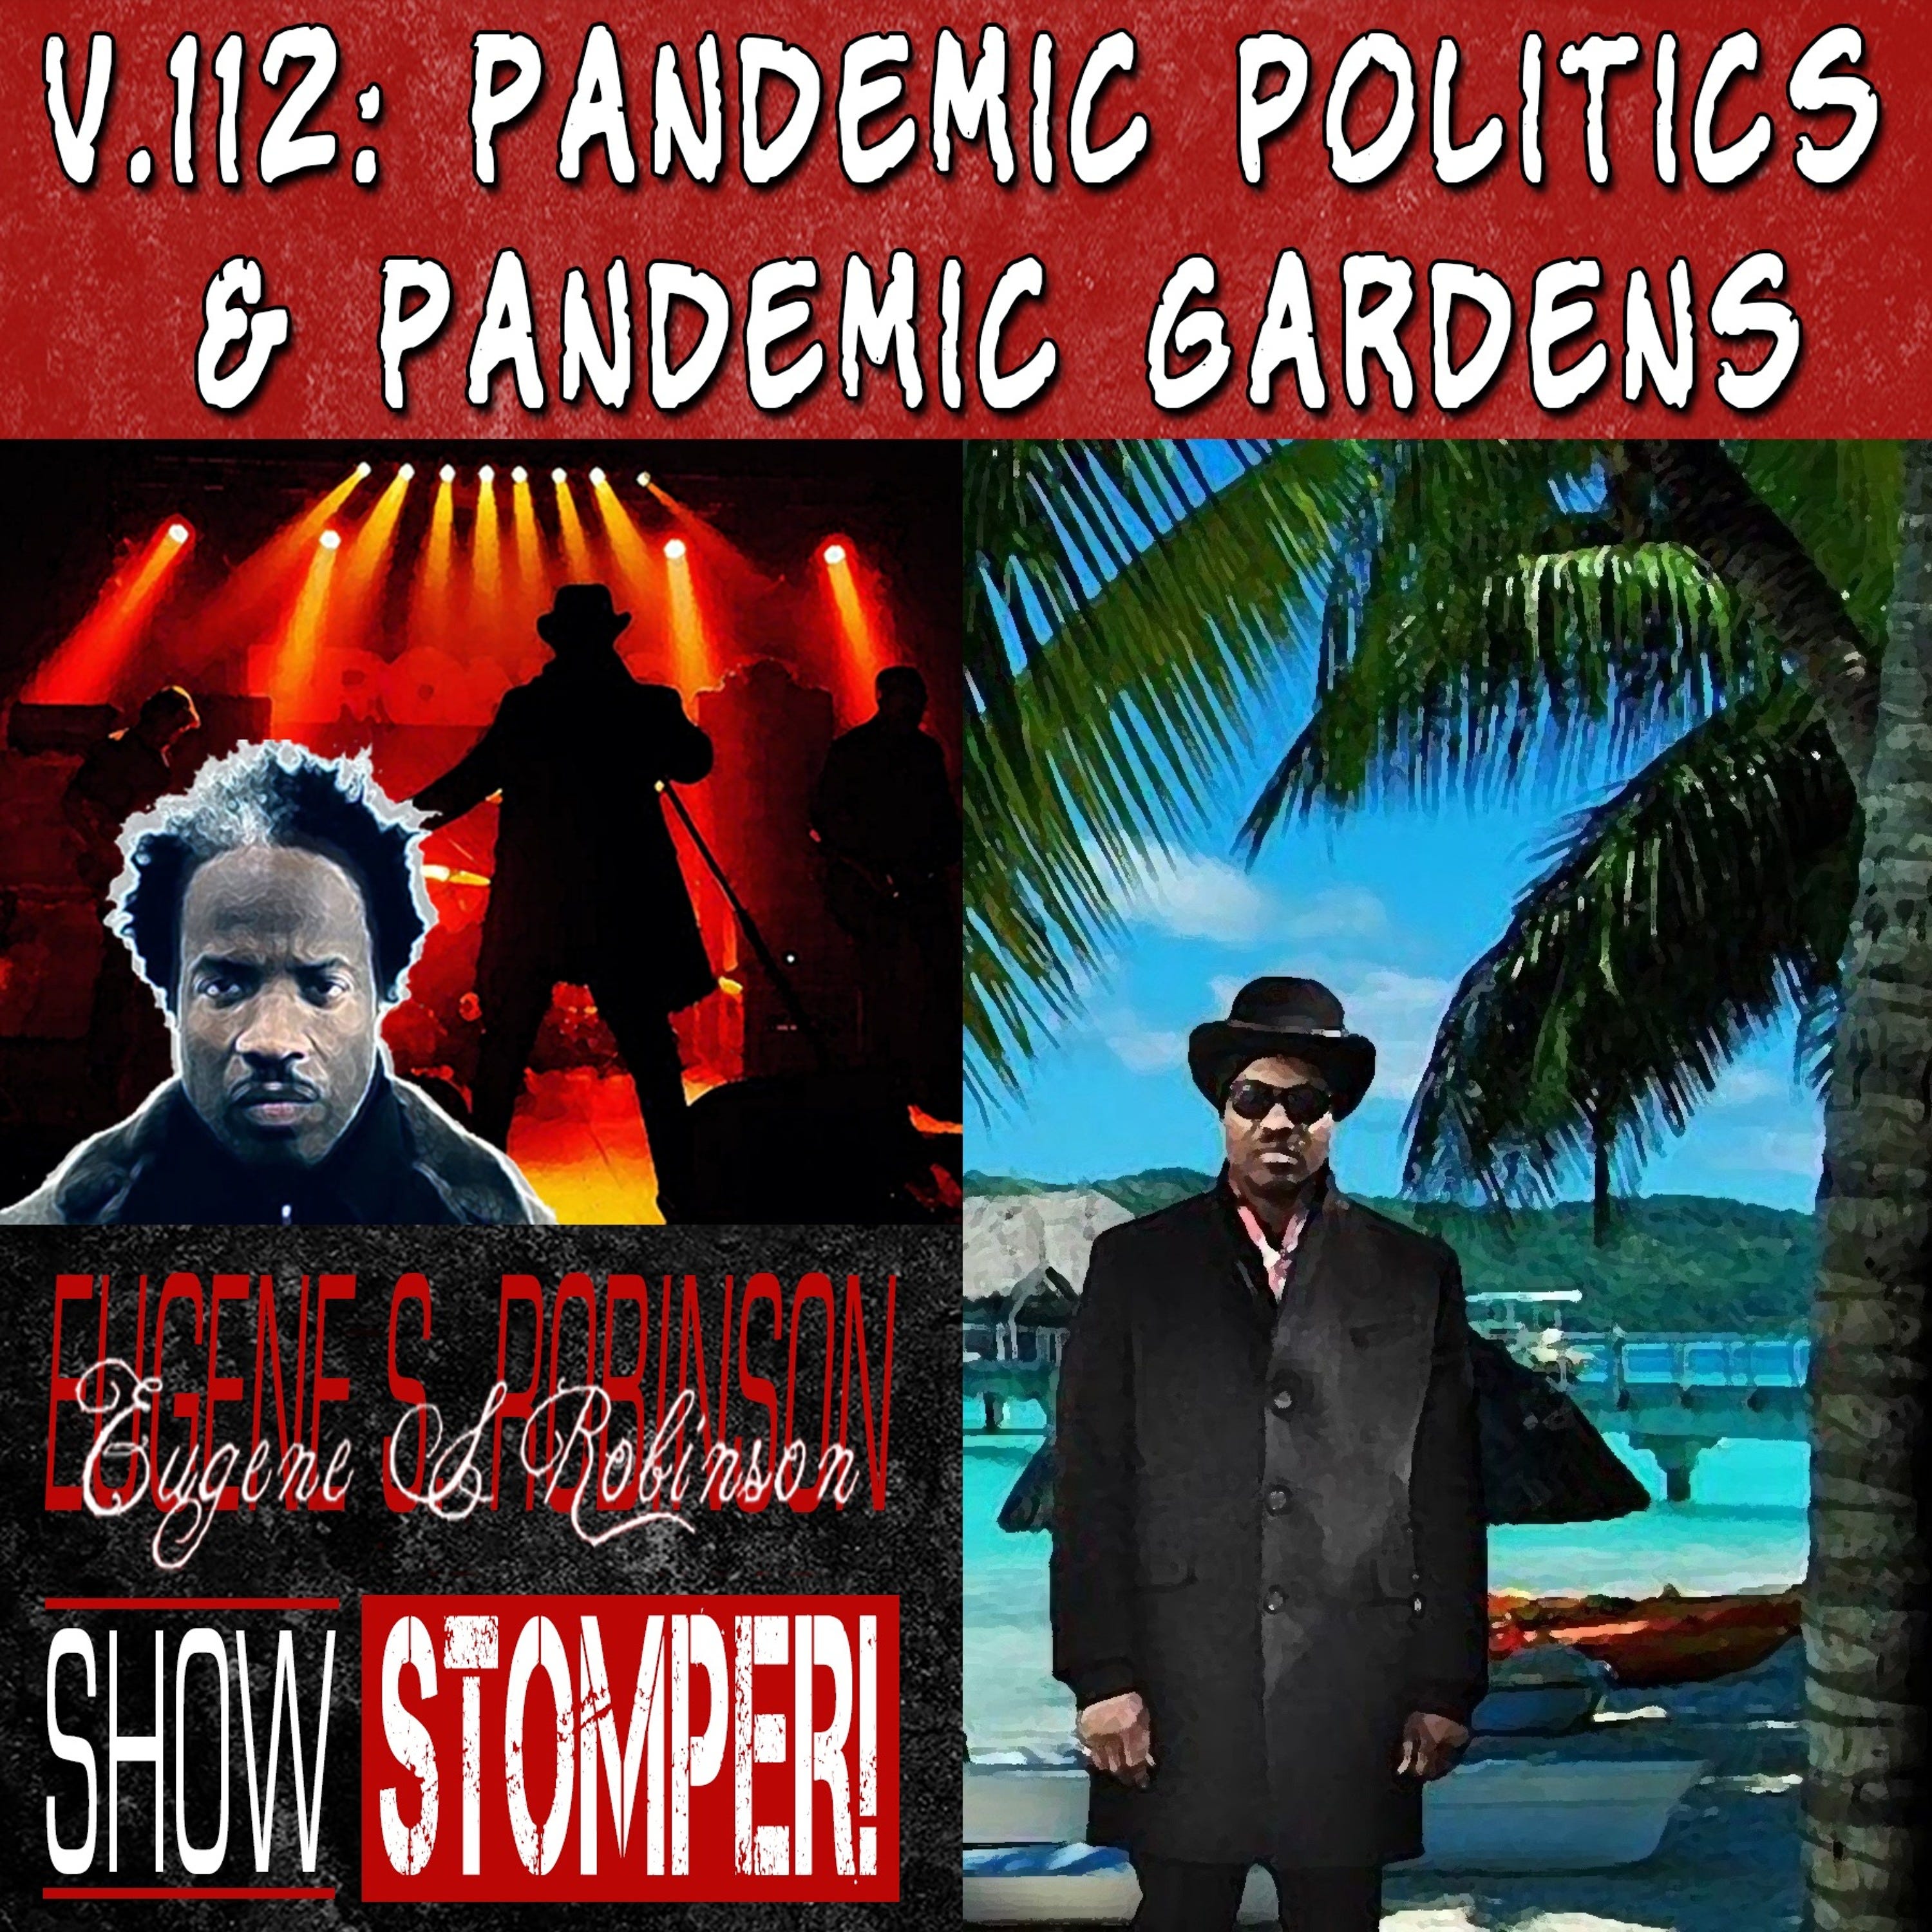 V. 112 UFC 249, Pandemic Politics + Pandemic Gardens On The Eugene S. Robinson Show Stomper!